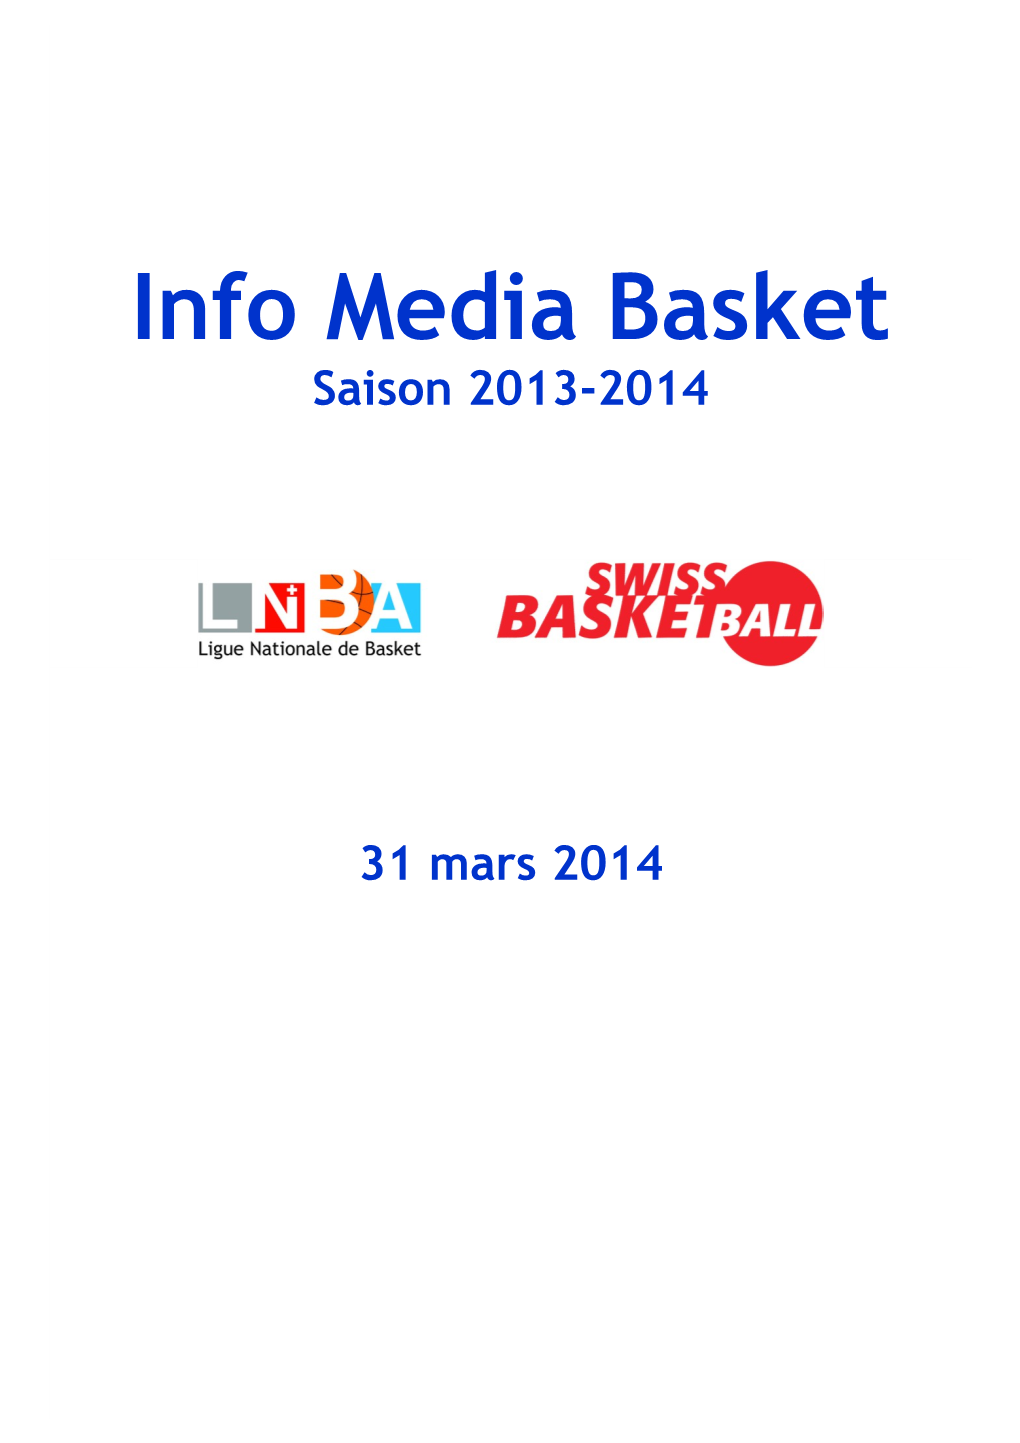 Info Media Basket Saison 2013-2014